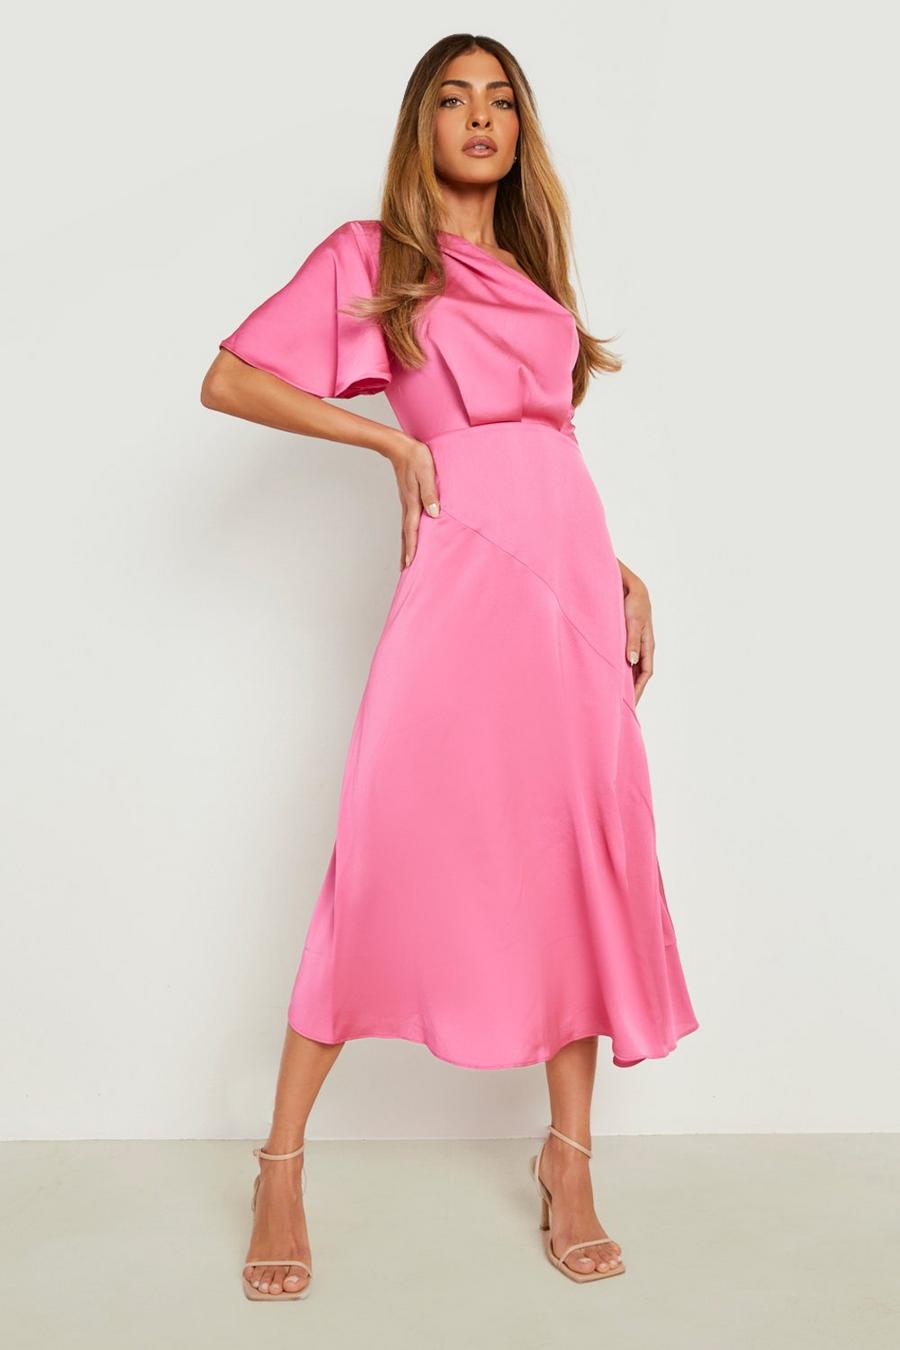 Hot pink rosa Satin Asymmetric Midaxi Dress